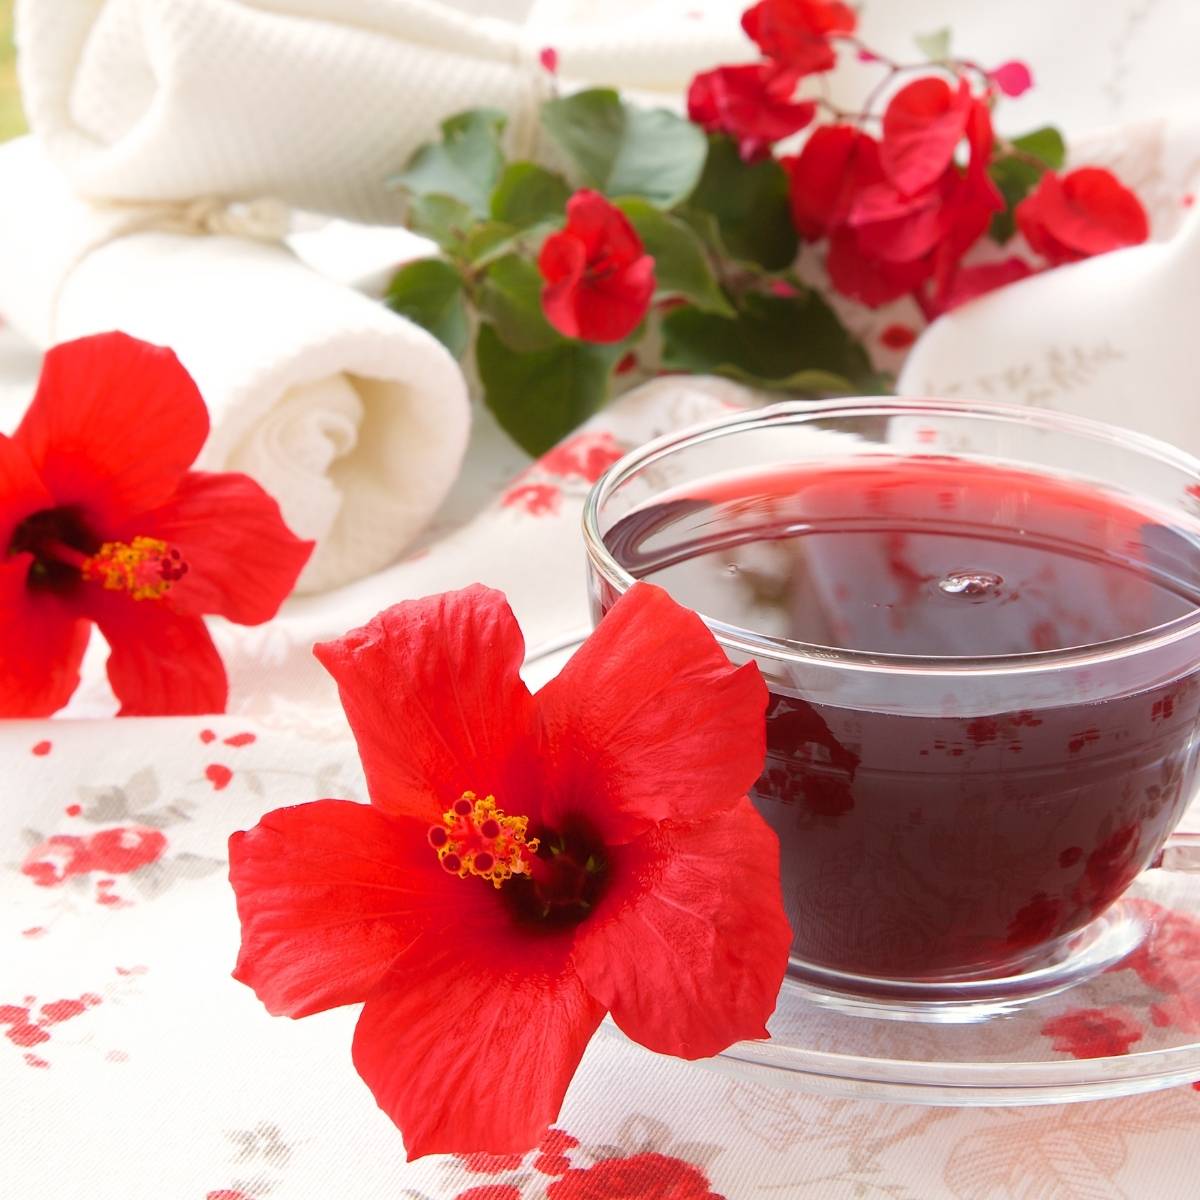 Hibiscus for Well-Being: 11 Major Health Benefits of Hibiscus Tea